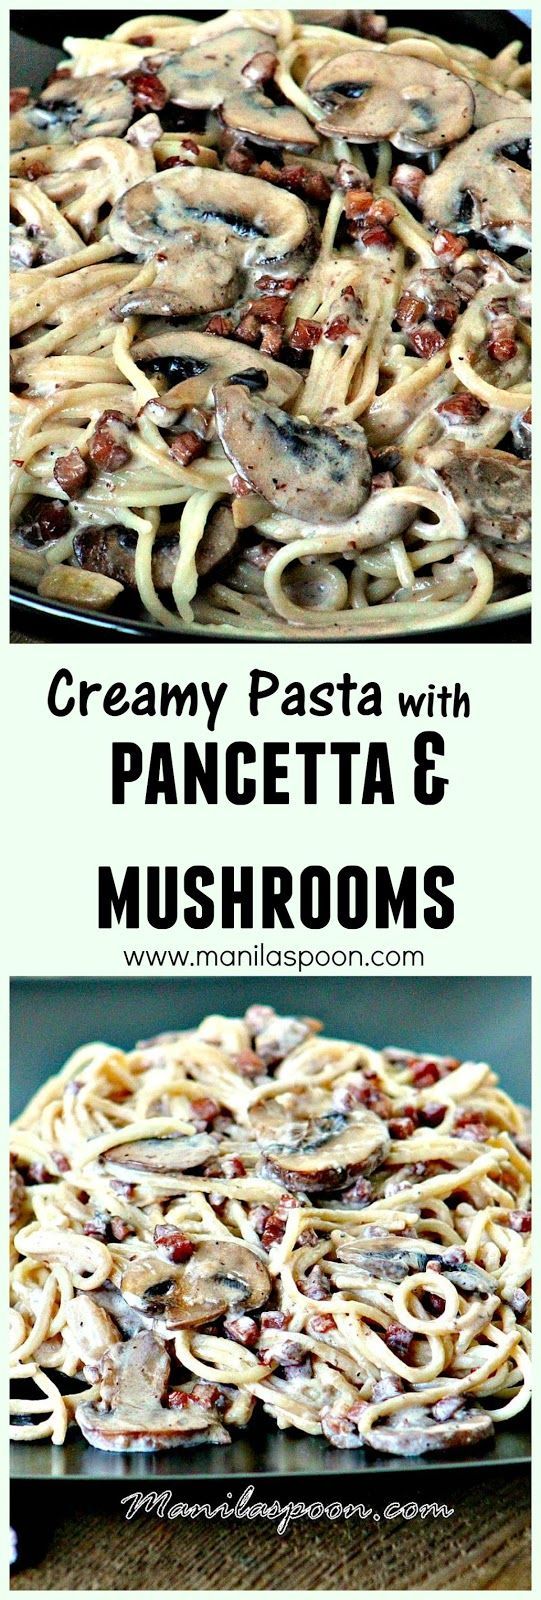 Creamy Pasta with Pancetta and Mushrooms